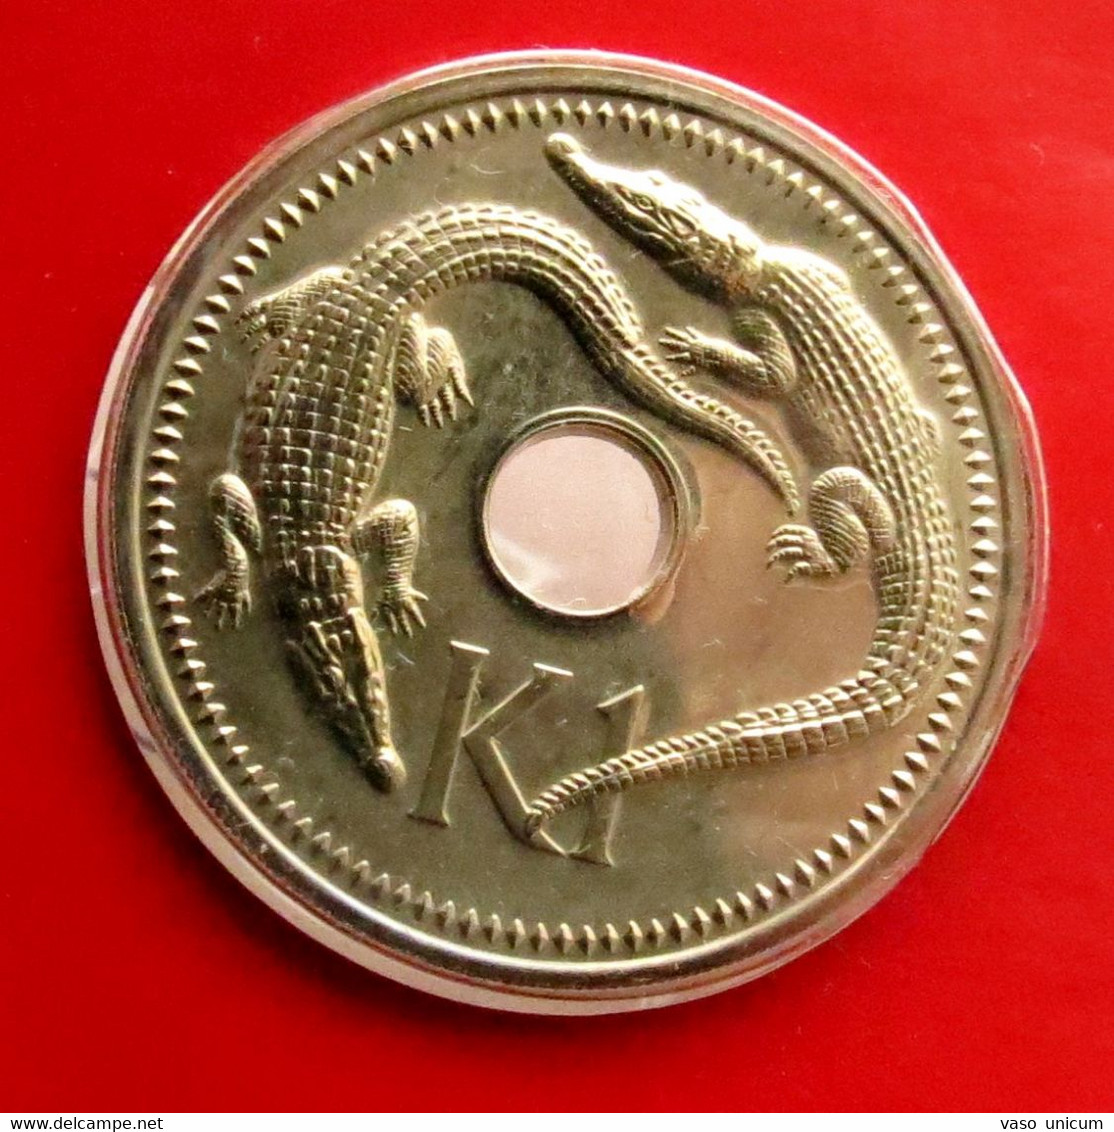 Papua New Guinea 1 Kina 1977 UNC - Minted 603 Coins Only - Papua-Neuguinea